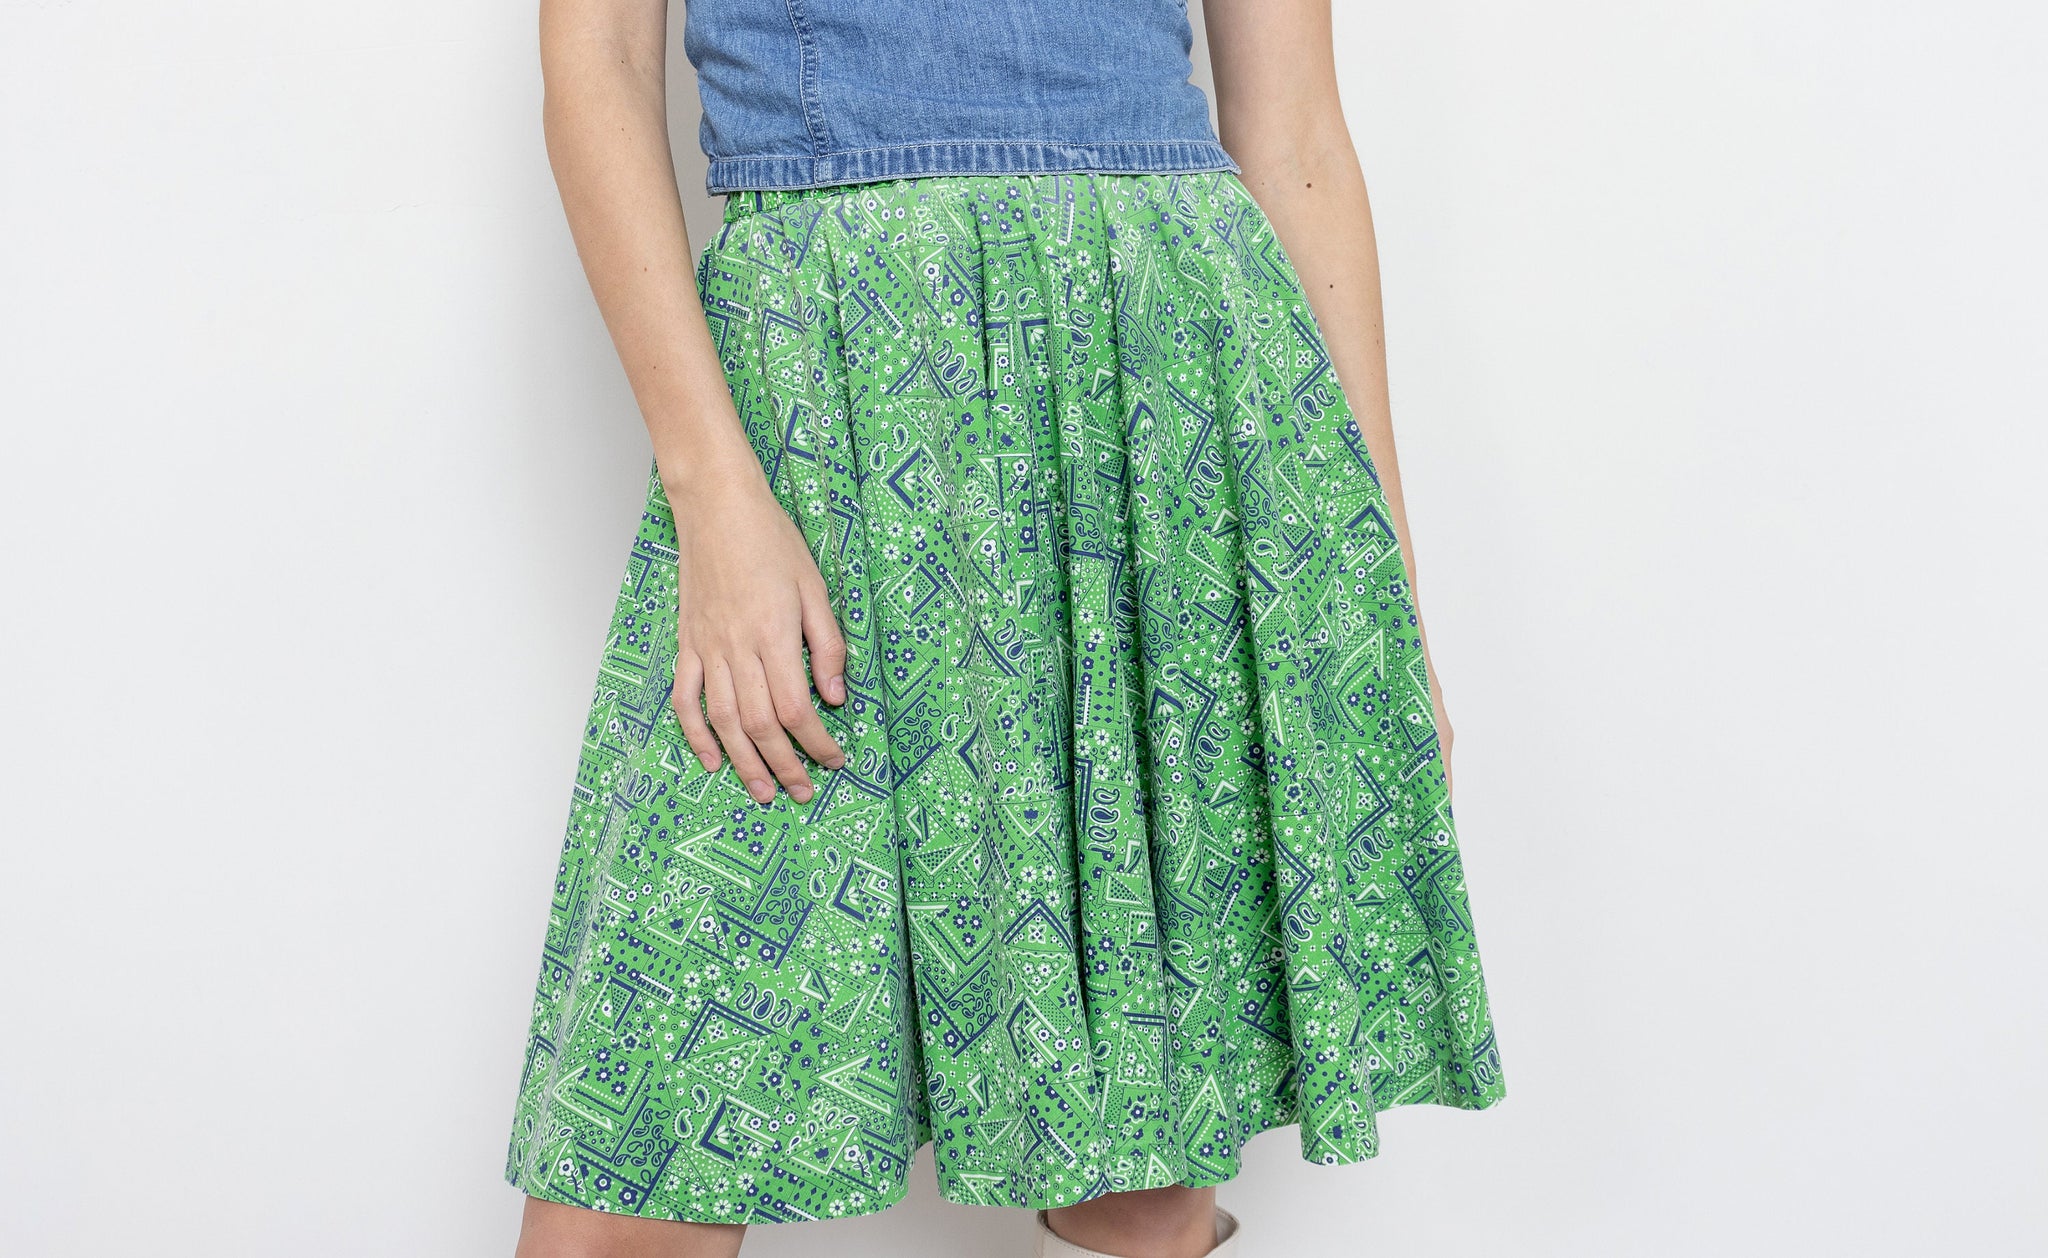 Bandana Skirt